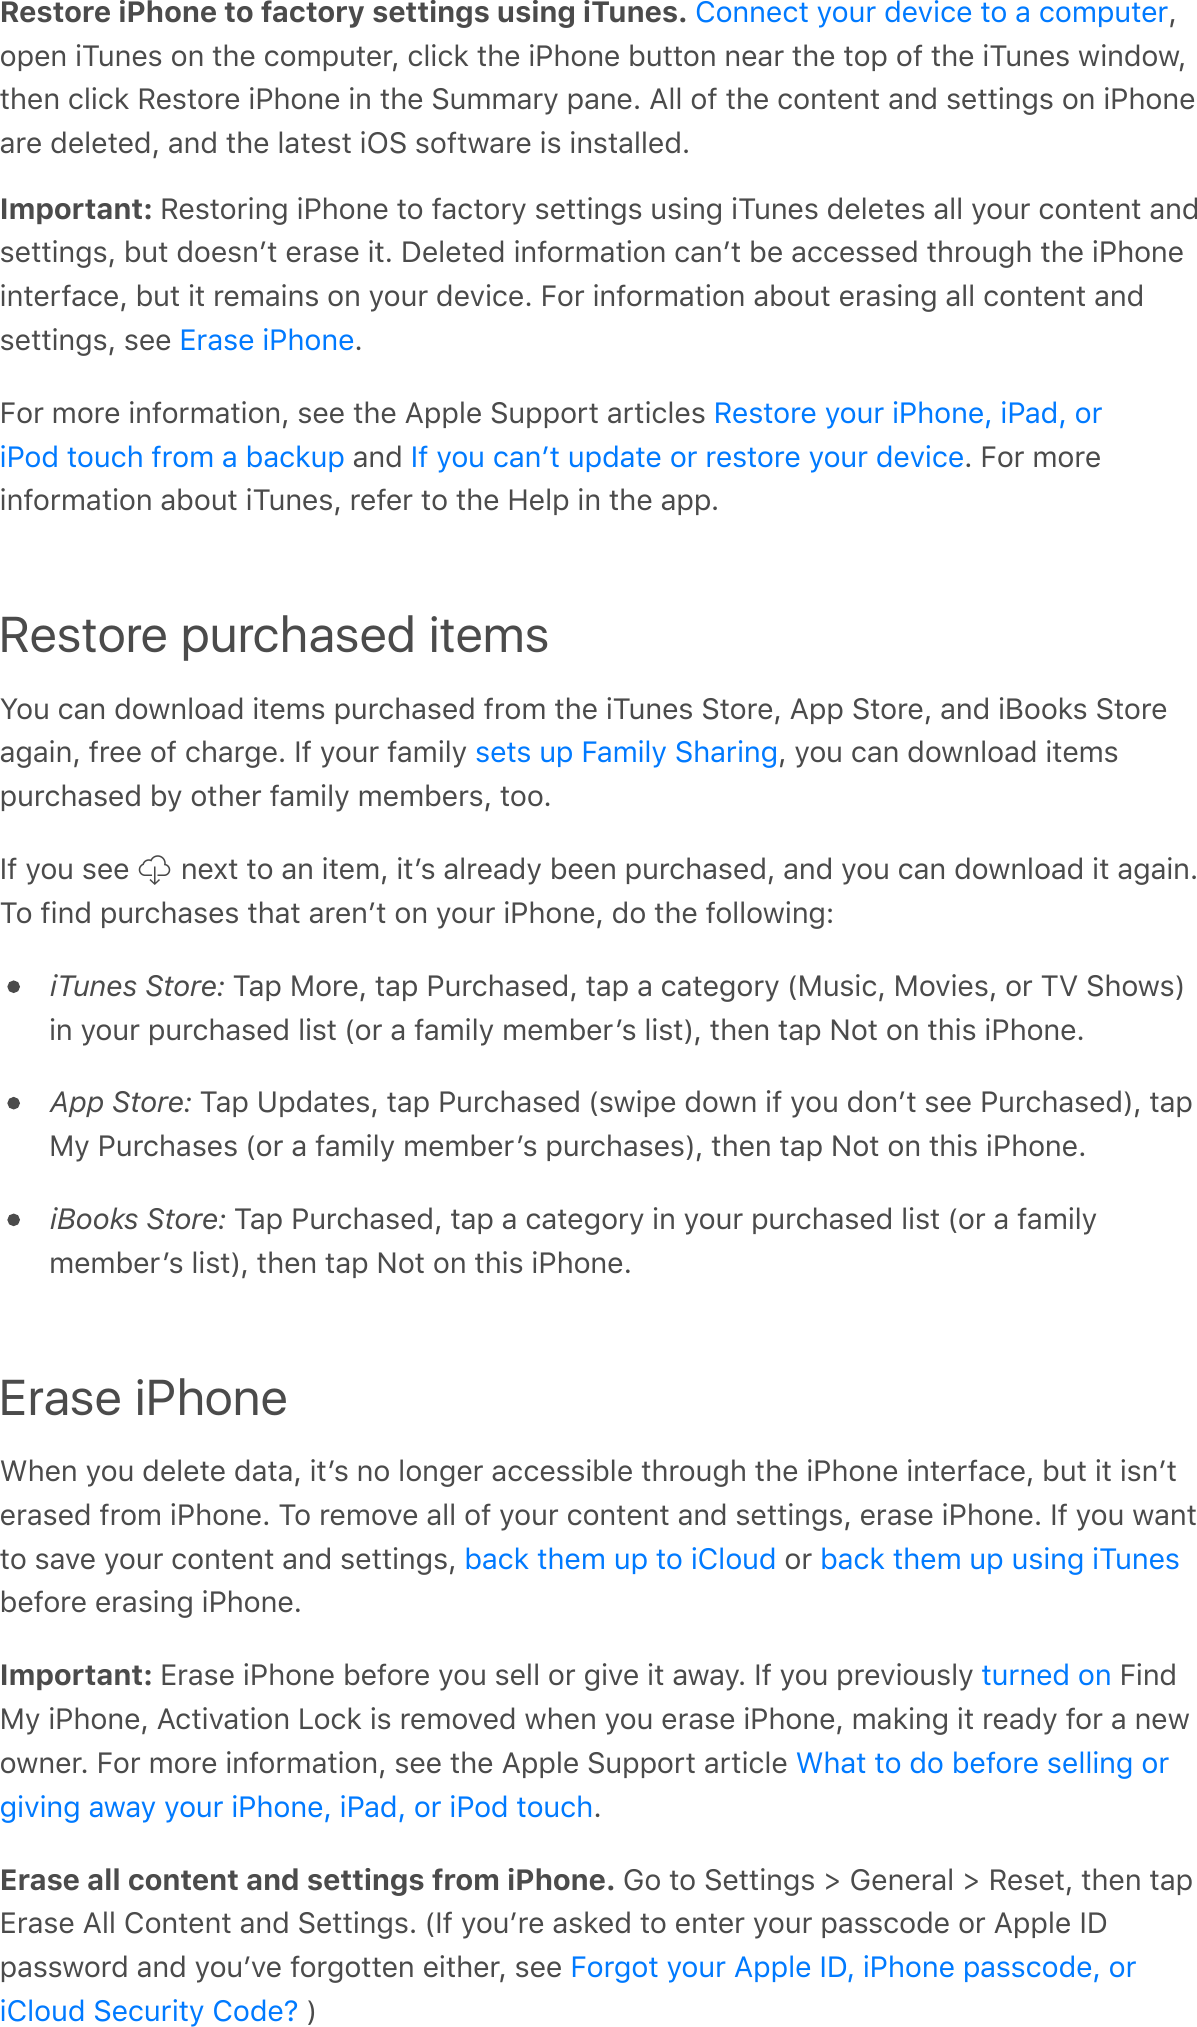 Restore iPhone to factory settings using iTunes.  Q$;&amp;%&apos;!?6%&amp;,&apos;$%&apos;*#&amp;&apos;/$9;6*&amp;0Q&apos;/.!/2&apos;*#&amp;&apos;!&quot;#$%&amp;&apos;F6**$%&apos;%&amp;-0&apos;*#&amp;&apos;*$;&apos;$7&apos;*#&amp;&apos;!?6%&amp;,&apos;3!%C$3Q*#&amp;%&apos;/.!/2&apos;I&amp;,*$0&amp;&apos;!&quot;#$%&amp;&apos;!%&apos;*#&amp;&apos;:699-0&gt;&apos;;-%&amp;G&apos;B..&apos;$7&apos;*#&amp;&apos;/$%*&amp;%*&apos;-%C&apos;,&amp;**!%4,&apos;$%&apos;!&quot;#$%&amp;-0&amp;&apos;C&amp;.&amp;*&amp;CQ&apos;-%C&apos;*#&amp;&apos;.-*&amp;,*&apos;!N:&apos;,$7*3-0&amp;&apos;!,&apos;!%,*-..&amp;CGImportant: I&amp;,*$0!%4&apos;!&quot;#$%&amp;&apos;*$&apos;7-/*$0&gt;&apos;,&amp;**!%4,&apos;6,!%4&apos;!?6%&amp;,&apos;C&amp;.&amp;*&amp;,&apos;-..&apos;&gt;$60&apos;/$%*&amp;%*&apos;-%C,&amp;**!%4,Q&apos;F6*&apos;C$&amp;,%+*&apos;&amp;0-,&amp;&apos;!*G&apos;&lt;&amp;.&amp;*&amp;C&apos;!%7$09-*!$%&apos;/-%+*&apos;F&amp;&apos;-//&amp;,,&amp;C&apos;*#0$64#&apos;*#&amp;&apos;!&quot;#$%&amp;!%*&amp;07-/&amp;Q&apos;F6*&apos;!*&apos;0&amp;9-!%,&apos;$%&apos;&gt;$60&apos;C&amp;A!/&amp;G&apos;5$0&apos;!%7$09-*!$%&apos;-F$6*&apos;&amp;0-,!%4&apos;-..&apos;/$%*&amp;%*&apos;-%C,&amp;**!%4,Q&apos;,&amp;&amp;&apos; G5$0&apos;9$0&amp;&apos;!%7$09-*!$%Q&apos;,&amp;&amp;&apos;*#&amp;&apos;B;;.&amp;&apos;:6;;$0*&apos;-0*!/.&amp;,&apos;&apos;-%C&apos; G&apos;5$0&apos;9$0&amp;!%7$09-*!$%&apos;-F$6*&apos;!?6%&amp;,Q&apos;0&amp;7&amp;0&apos;*$&apos;*#&amp;&apos;`&amp;.;&apos;!%&apos;*#&amp;&apos;-;;GRestore purchased itemsS$6&apos;/-%&apos;C$3%.$-C&apos;!*&amp;9,&apos;;60/#-,&amp;C&apos;70$9&apos;*#&amp;&apos;!?6%&amp;,&apos;:*$0&amp;Q&apos;B;;&apos;:*$0&amp;Q&apos;-%C&apos;!P$$2,&apos;:*$0&amp;-4-!%Q&apos;70&amp;&amp;&apos;$7&apos;/#-04&amp;G&apos;)7&apos;&gt;$60&apos;7-9!.&gt;&apos; Q&apos;&gt;$6&apos;/-%&apos;C$3%.$-C&apos;!*&amp;9,;60/#-,&amp;C&apos;F&gt;&apos;$*#&amp;0&apos;7-9!.&gt;&apos;9&amp;9F&amp;0,Q&apos;*$$G)7&apos;&gt;$6&apos;,&amp;&amp;&apos; &apos;%&amp;^*&apos;*$&apos;-%&apos;!*&amp;9Q&apos;!*+,&apos;-.0&amp;-C&gt;&apos;F&amp;&amp;%&apos;;60/#-,&amp;CQ&apos;-%C&apos;&gt;$6&apos;/-%&apos;C$3%.$-C&apos;!*&apos;-4-!%G?$&apos;7!%C&apos;;60/#-,&amp;,&apos;*#-*&apos;-0&amp;%+*&apos;$%&apos;&gt;$60&apos;!&quot;#$%&amp;Q&apos;C$&apos;*#&amp;&apos;7$..$3!%4RiTunes Store:&apos;?-;&apos;H$0&amp;Q&apos;*-;&apos;&quot;60/#-,&amp;CQ&apos;*-;&apos;-&apos;/-*&amp;4$0&gt;&apos;\H6,!/Q&apos;H$A!&amp;,Q&apos;$0&apos;?Z&apos;:#$3,]!%&apos;&gt;$60&apos;;60/#-,&amp;C&apos;.!,*&apos;\$0&apos;-&apos;7-9!.&gt;&apos;9&amp;9F&amp;0+,&apos;.!,*]Q&apos;*#&amp;%&apos;*-;&apos;E$*&apos;$%&apos;*#!,&apos;!&quot;#$%&amp;GApp Store:&apos;?-;&apos;1;C-*&amp;,Q&apos;*-;&apos;&quot;60/#-,&amp;C&apos;\,3!;&amp;&apos;C$3%&apos;!7&apos;&gt;$6&apos;C$%+*&apos;,&amp;&amp;&apos;&quot;60/#-,&amp;C]Q&apos;*-;H&gt;&apos;&quot;60/#-,&amp;,&apos;\$0&apos;-&apos;7-9!.&gt;&apos;9&amp;9F&amp;0+,&apos;;60/#-,&amp;,]Q&apos;*#&amp;%&apos;*-;&apos;E$*&apos;$%&apos;*#!,&apos;!&quot;#$%&amp;GiBooks Store:&apos;?-;&apos;&quot;60/#-,&amp;CQ&apos;*-;&apos;-&apos;/-*&amp;4$0&gt;&apos;!%&apos;&gt;$60&apos;;60/#-,&amp;C&apos;.!,*&apos;\$0&apos;-&apos;7-9!.&gt;9&amp;9F&amp;0+,&apos;.!,*]Q&apos;*#&amp;%&apos;*-;&apos;E$*&apos;$%&apos;*#!,&apos;!&quot;#$%&amp;GErase iPhoneL#&amp;%&apos;&gt;$6&apos;C&amp;.&amp;*&amp;&apos;C-*-Q&apos;!*+,&apos;%$&apos;.$%4&amp;0&apos;-//&amp;,,!F.&amp;&apos;*#0$64#&apos;*#&amp;&apos;!&quot;#$%&amp;&apos;!%*&amp;07-/&amp;Q&apos;F6*&apos;!*&apos;!,%+*&amp;0-,&amp;C&apos;70$9&apos;!&quot;#$%&amp;G&apos;?$&apos;0&amp;9$A&amp;&apos;-..&apos;$7&apos;&gt;$60&apos;/$%*&amp;%*&apos;-%C&apos;,&amp;**!%4,Q&apos;&amp;0-,&amp;&apos;!&quot;#$%&amp;G&apos;)7&apos;&gt;$6&apos;3-%**$&apos;,-A&amp;&apos;&gt;$60&apos;/$%*&amp;%*&apos;-%C&apos;,&amp;**!%4,Q&apos; &apos;$0&apos;F&amp;7$0&amp;&apos;&amp;0-,!%4&apos;!&quot;#$%&amp;GImportant: X0-,&amp;&apos;!&quot;#$%&amp;&apos;F&amp;7$0&amp;&apos;&gt;$6&apos;,&amp;..&apos;$0&apos;4!A&amp;&apos;!*&apos;-3-&gt;G&apos;)7&apos;&gt;$6&apos;;0&amp;A!$6,.&gt;&apos; &apos;5!%CH&gt;&apos;!&quot;#$%&amp;Q&apos;B/*!A-*!$%&apos;D$/2&apos;!,&apos;0&amp;9$A&amp;C&apos;3#&amp;%&apos;&gt;$6&apos;&amp;0-,&amp;&apos;!&quot;#$%&amp;Q&apos;9-2!%4&apos;!*&apos;0&amp;-C&gt;&apos;7$0&apos;-&apos;%&amp;3$3%&amp;0G&apos;5$0&apos;9$0&amp;&apos;!%7$09-*!$%Q&apos;,&amp;&amp;&apos;*#&amp;&apos;B;;.&amp;&apos;:6;;$0*&apos;-0*!/.&amp;&apos;GErase all content and settings from iPhone. M$&apos;*$&apos;:&amp;**!%4,&apos;e&apos;M&amp;%&amp;0-.&apos;e&apos;I&amp;,&amp;*Q&apos;*#&amp;%&apos;*-;X0-,&amp;&apos;B..&apos;T$%*&amp;%*&apos;-%C&apos;:&amp;**!%4,G&apos;\)7&apos;&gt;$6+0&amp;&apos;-,2&amp;C&apos;*$&apos;&amp;%*&amp;0&apos;&gt;$60&apos;;-,,/$C&amp;&apos;$0&apos;B;;.&amp;&apos;)&lt;;-,,3$0C&apos;-%C&apos;&gt;$6+A&amp;&apos;7$04$**&amp;%&apos;&amp;!*#&amp;0Q&apos;,&amp;&amp;&apos;&apos;]T$%%&amp;/*&apos;&gt;$60&apos;C&amp;A!/&amp;&apos;*$&apos;-&apos;/$9;6*&amp;0X0-,&amp;&apos;!&quot;#$%&amp;I&amp;,*$0&amp;&apos;&gt;$60&apos;!&quot;#$%&amp;Q&apos;!&quot;-CQ&apos;$0!&quot;$C&apos;*$6/#&apos;70$9&apos;-&apos;F-/26; )7&apos;&gt;$6&apos;/-%+*&apos;6;C-*&amp;&apos;$0&apos;0&amp;,*$0&amp;&apos;&gt;$60&apos;C&amp;A!/&amp;,&amp;*,&apos;6;&apos;5-9!.&gt;&apos;:#-0!%4F-/2&apos;*#&amp;9&apos;6;&apos;*$&apos;!T.$6C F-/2&apos;*#&amp;9&apos;6;&apos;6,!%4&apos;!?6%&amp;,*60%&amp;C&apos;$%L#-*&apos;*$&apos;C$&apos;F&amp;7$0&amp;&apos;,&amp;..!%4&apos;$04!A!%4&apos;-3-&gt;&apos;&gt;$60&apos;!&quot;#$%&amp;Q&apos;!&quot;-CQ&apos;$0&apos;!&quot;$C&apos;*$6/#5$04$*&apos;&gt;$60&apos;B;;.&amp;&apos;)&lt;Q&apos;!&quot;#$%&amp;&apos;;-,,/$C&amp;Q&apos;$0!T.$6C&apos;:&amp;/60!*&gt;&apos;T$C&amp;J